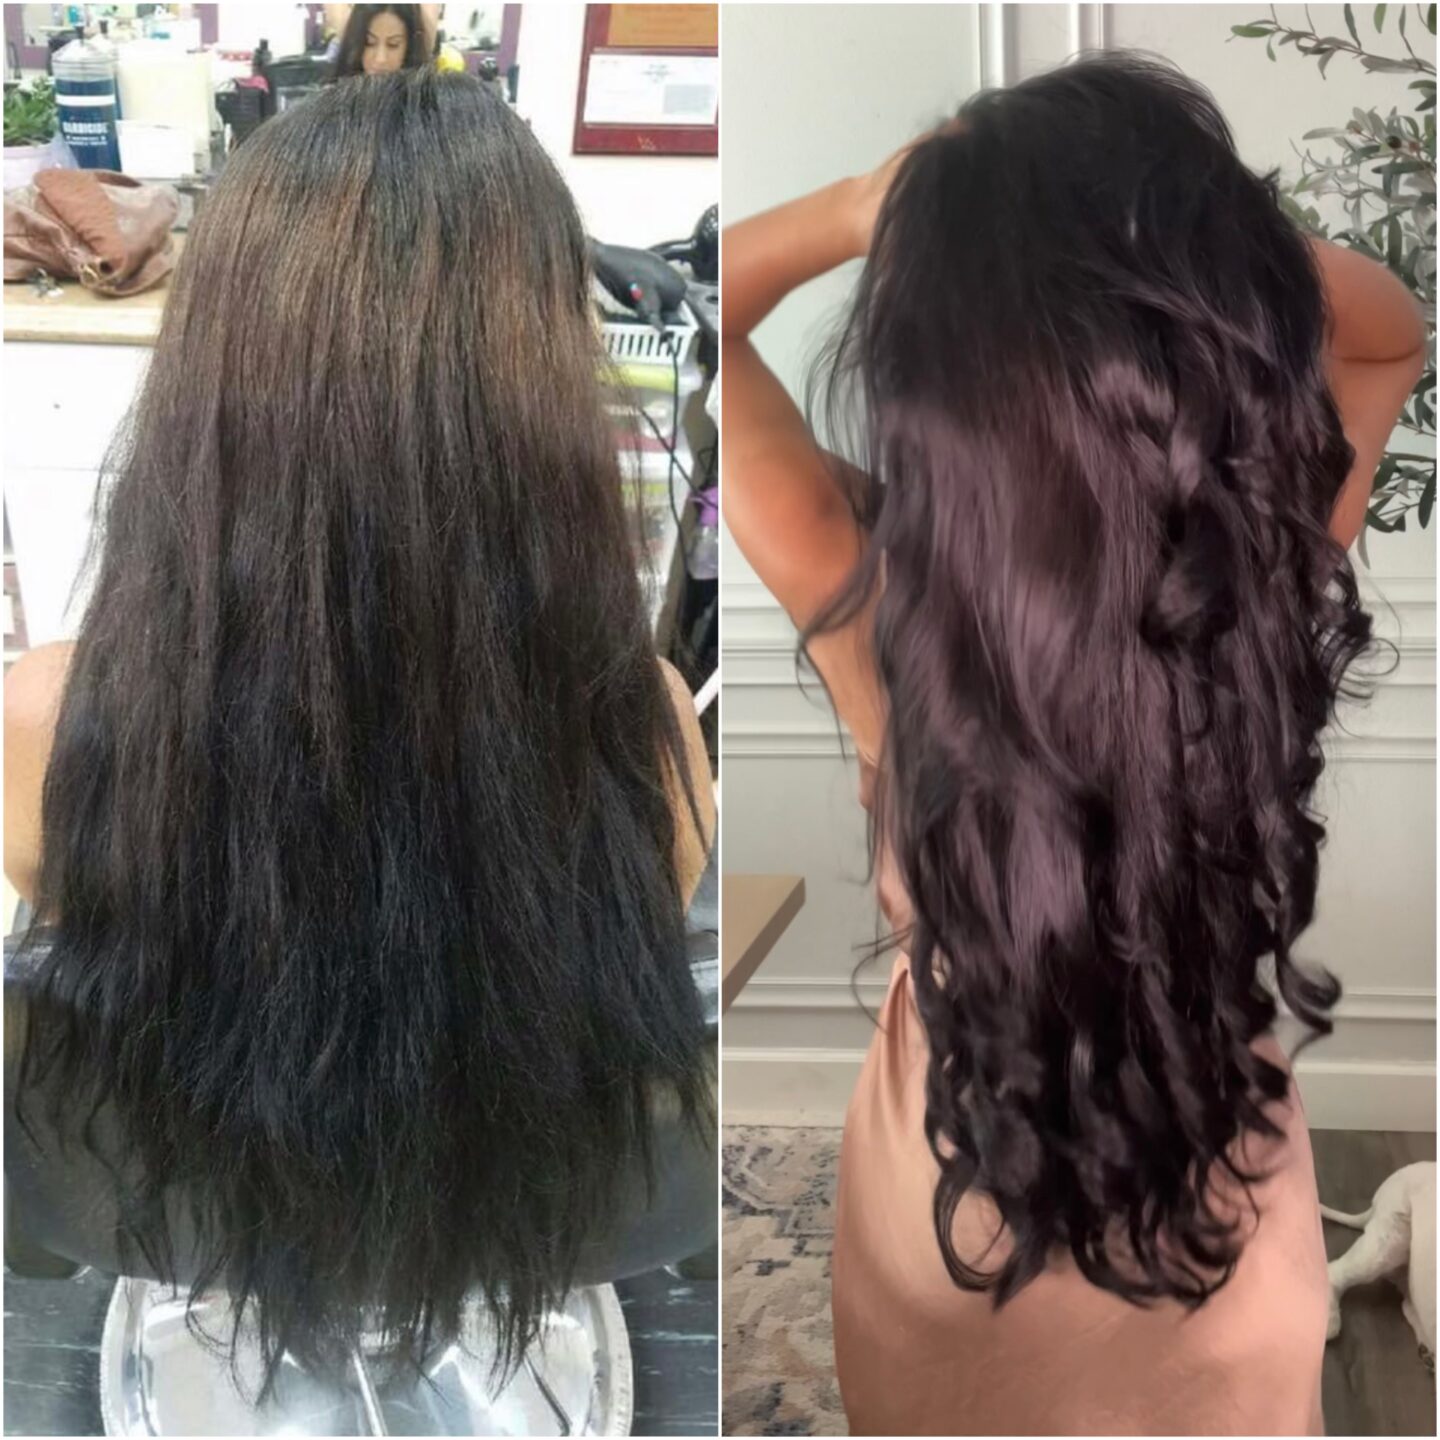 damaged long hair and healthy long hair compares